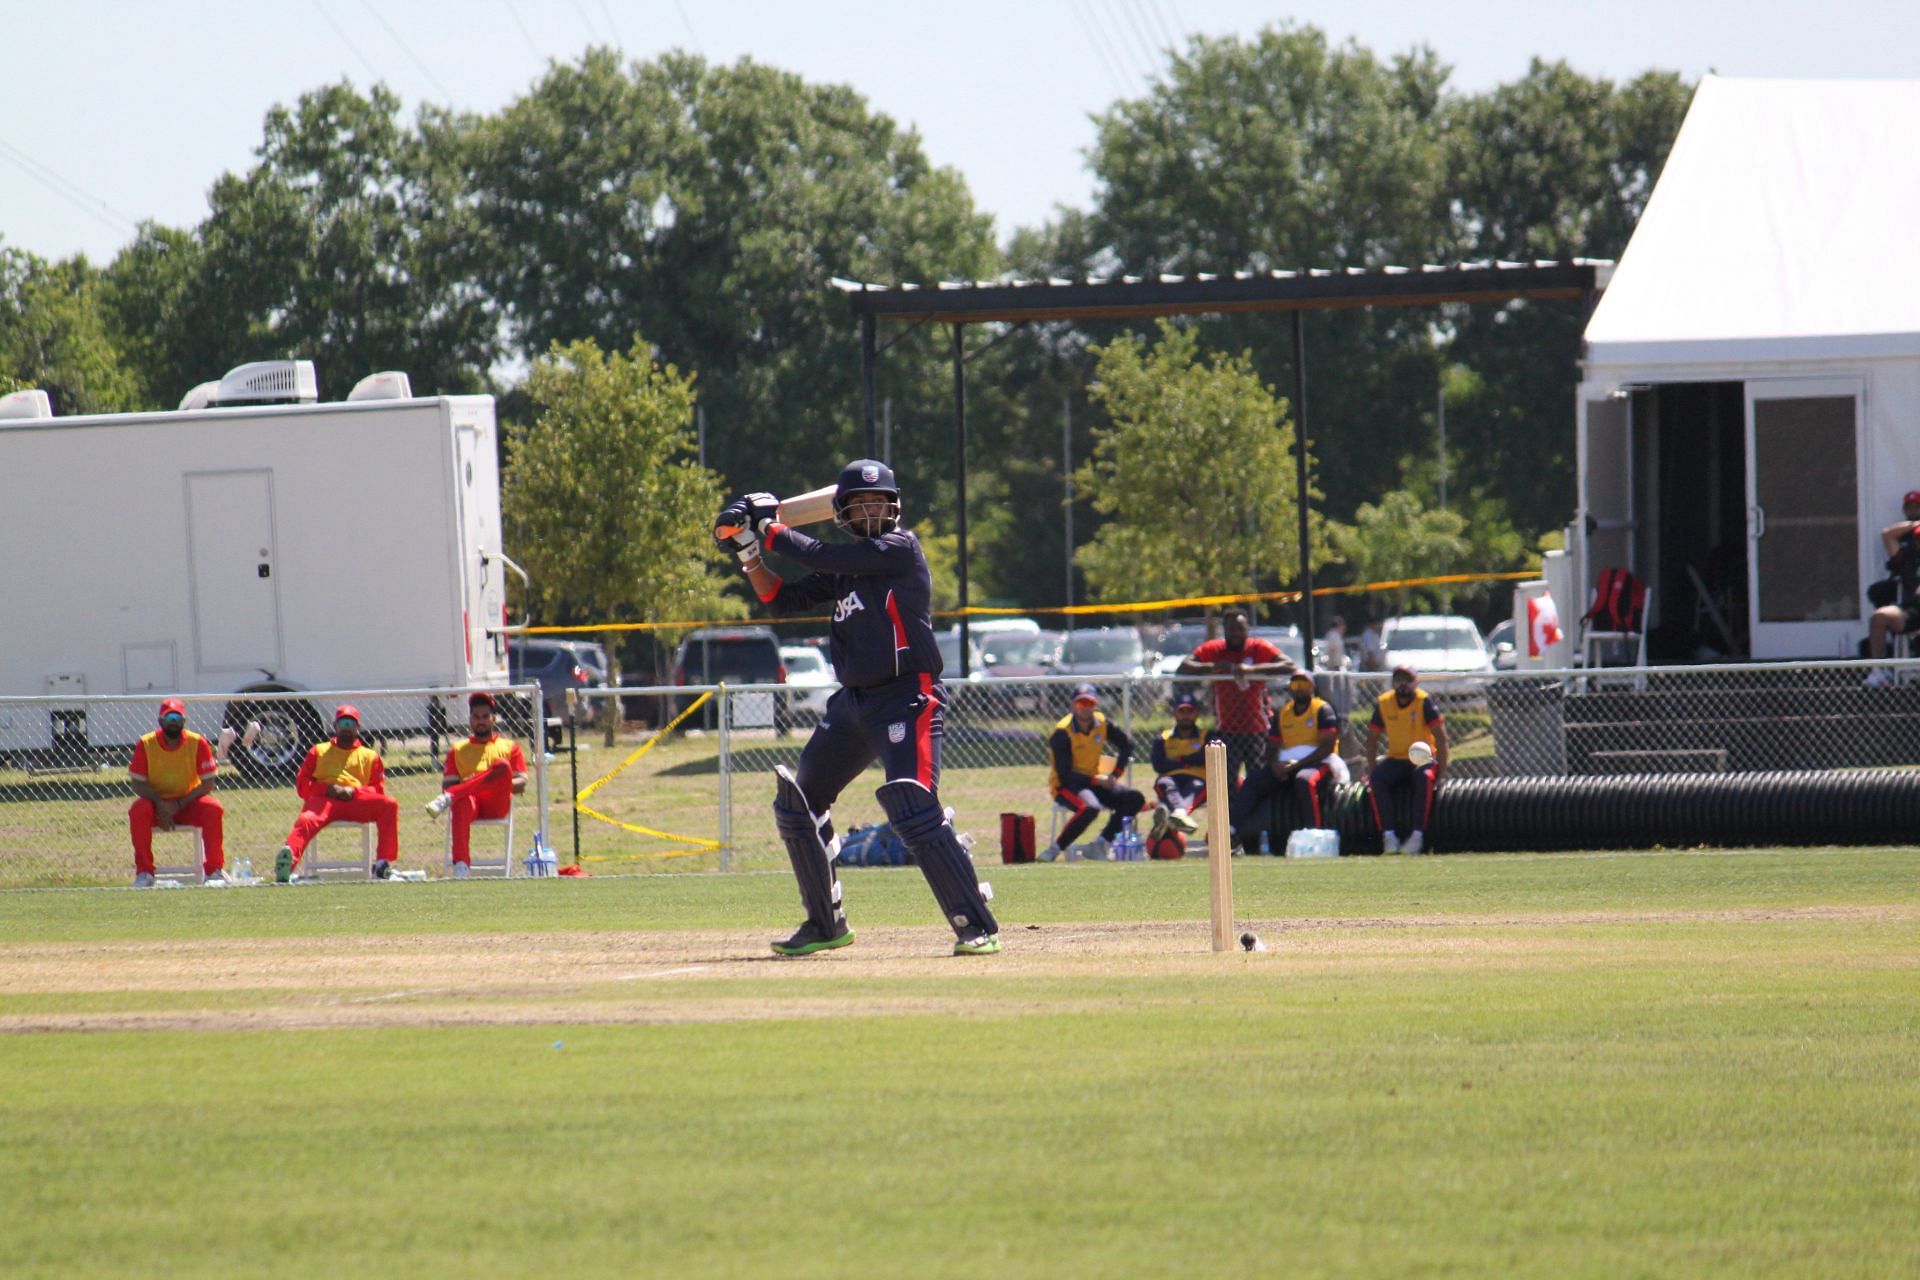 हरमीत सिंह ने किया बेहतरीन प्रदर्शन (Photo Credit - Cricket USA)